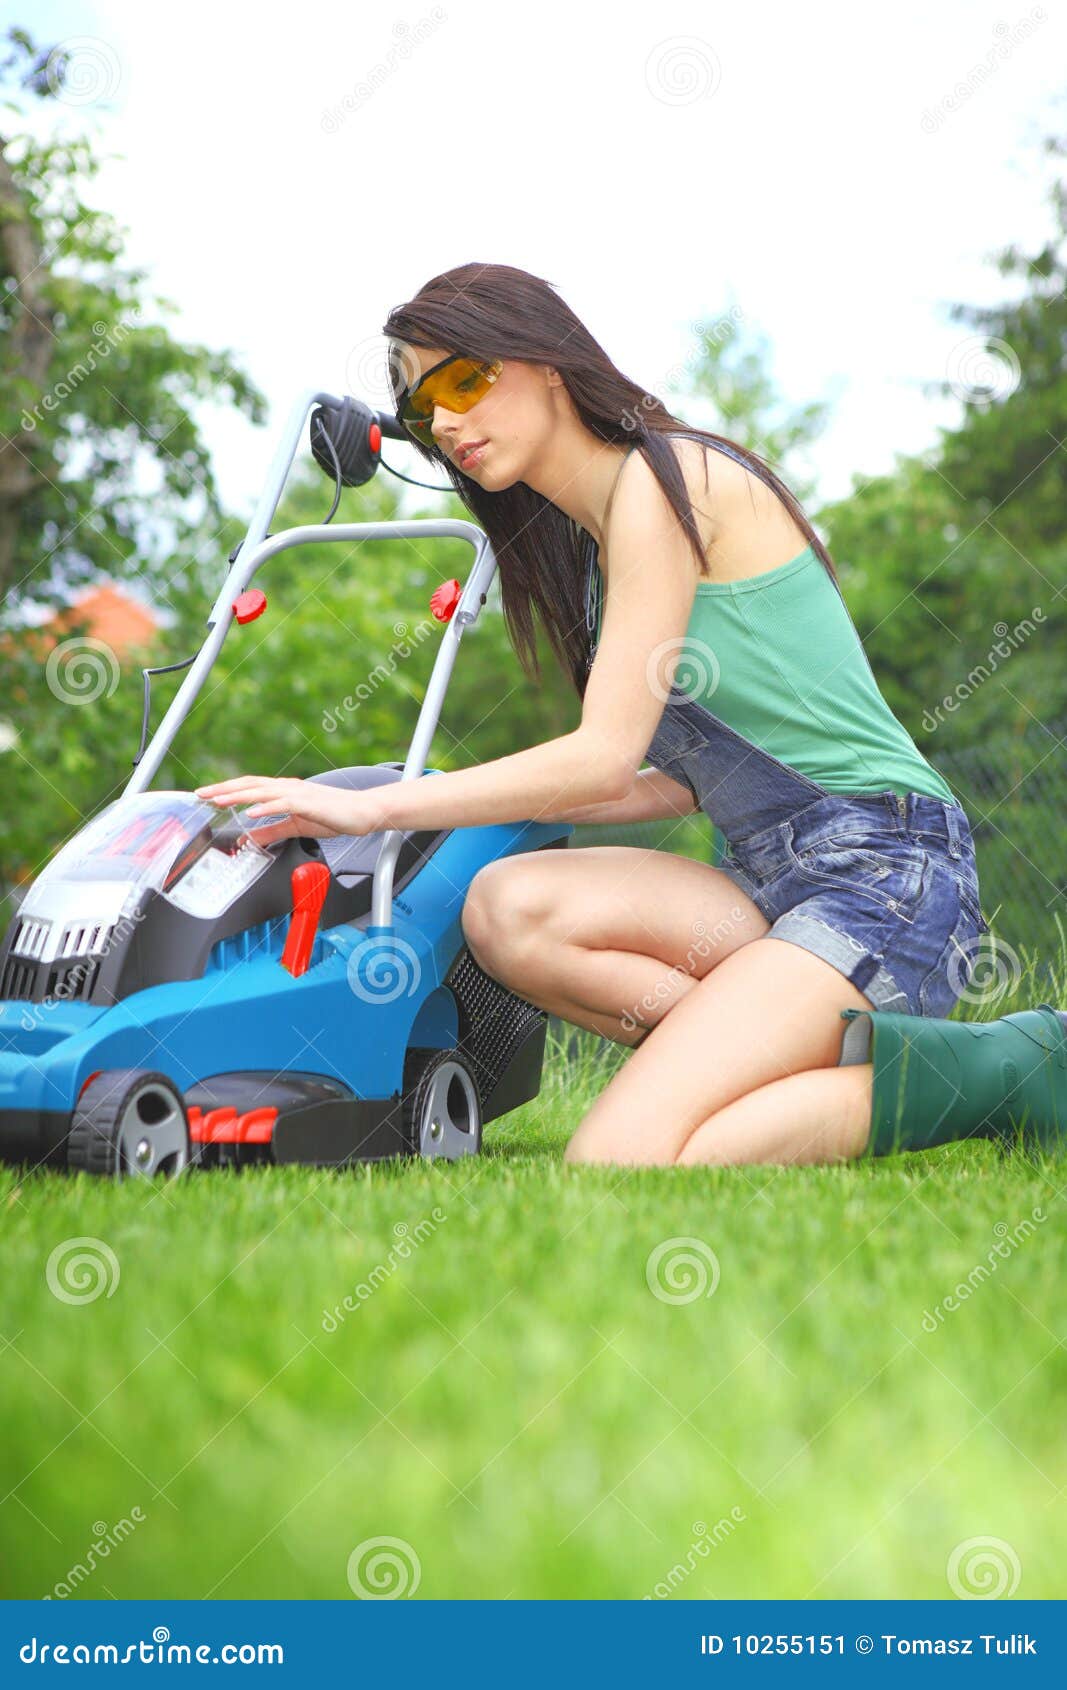 Pin Up Girl Lawn Mowers